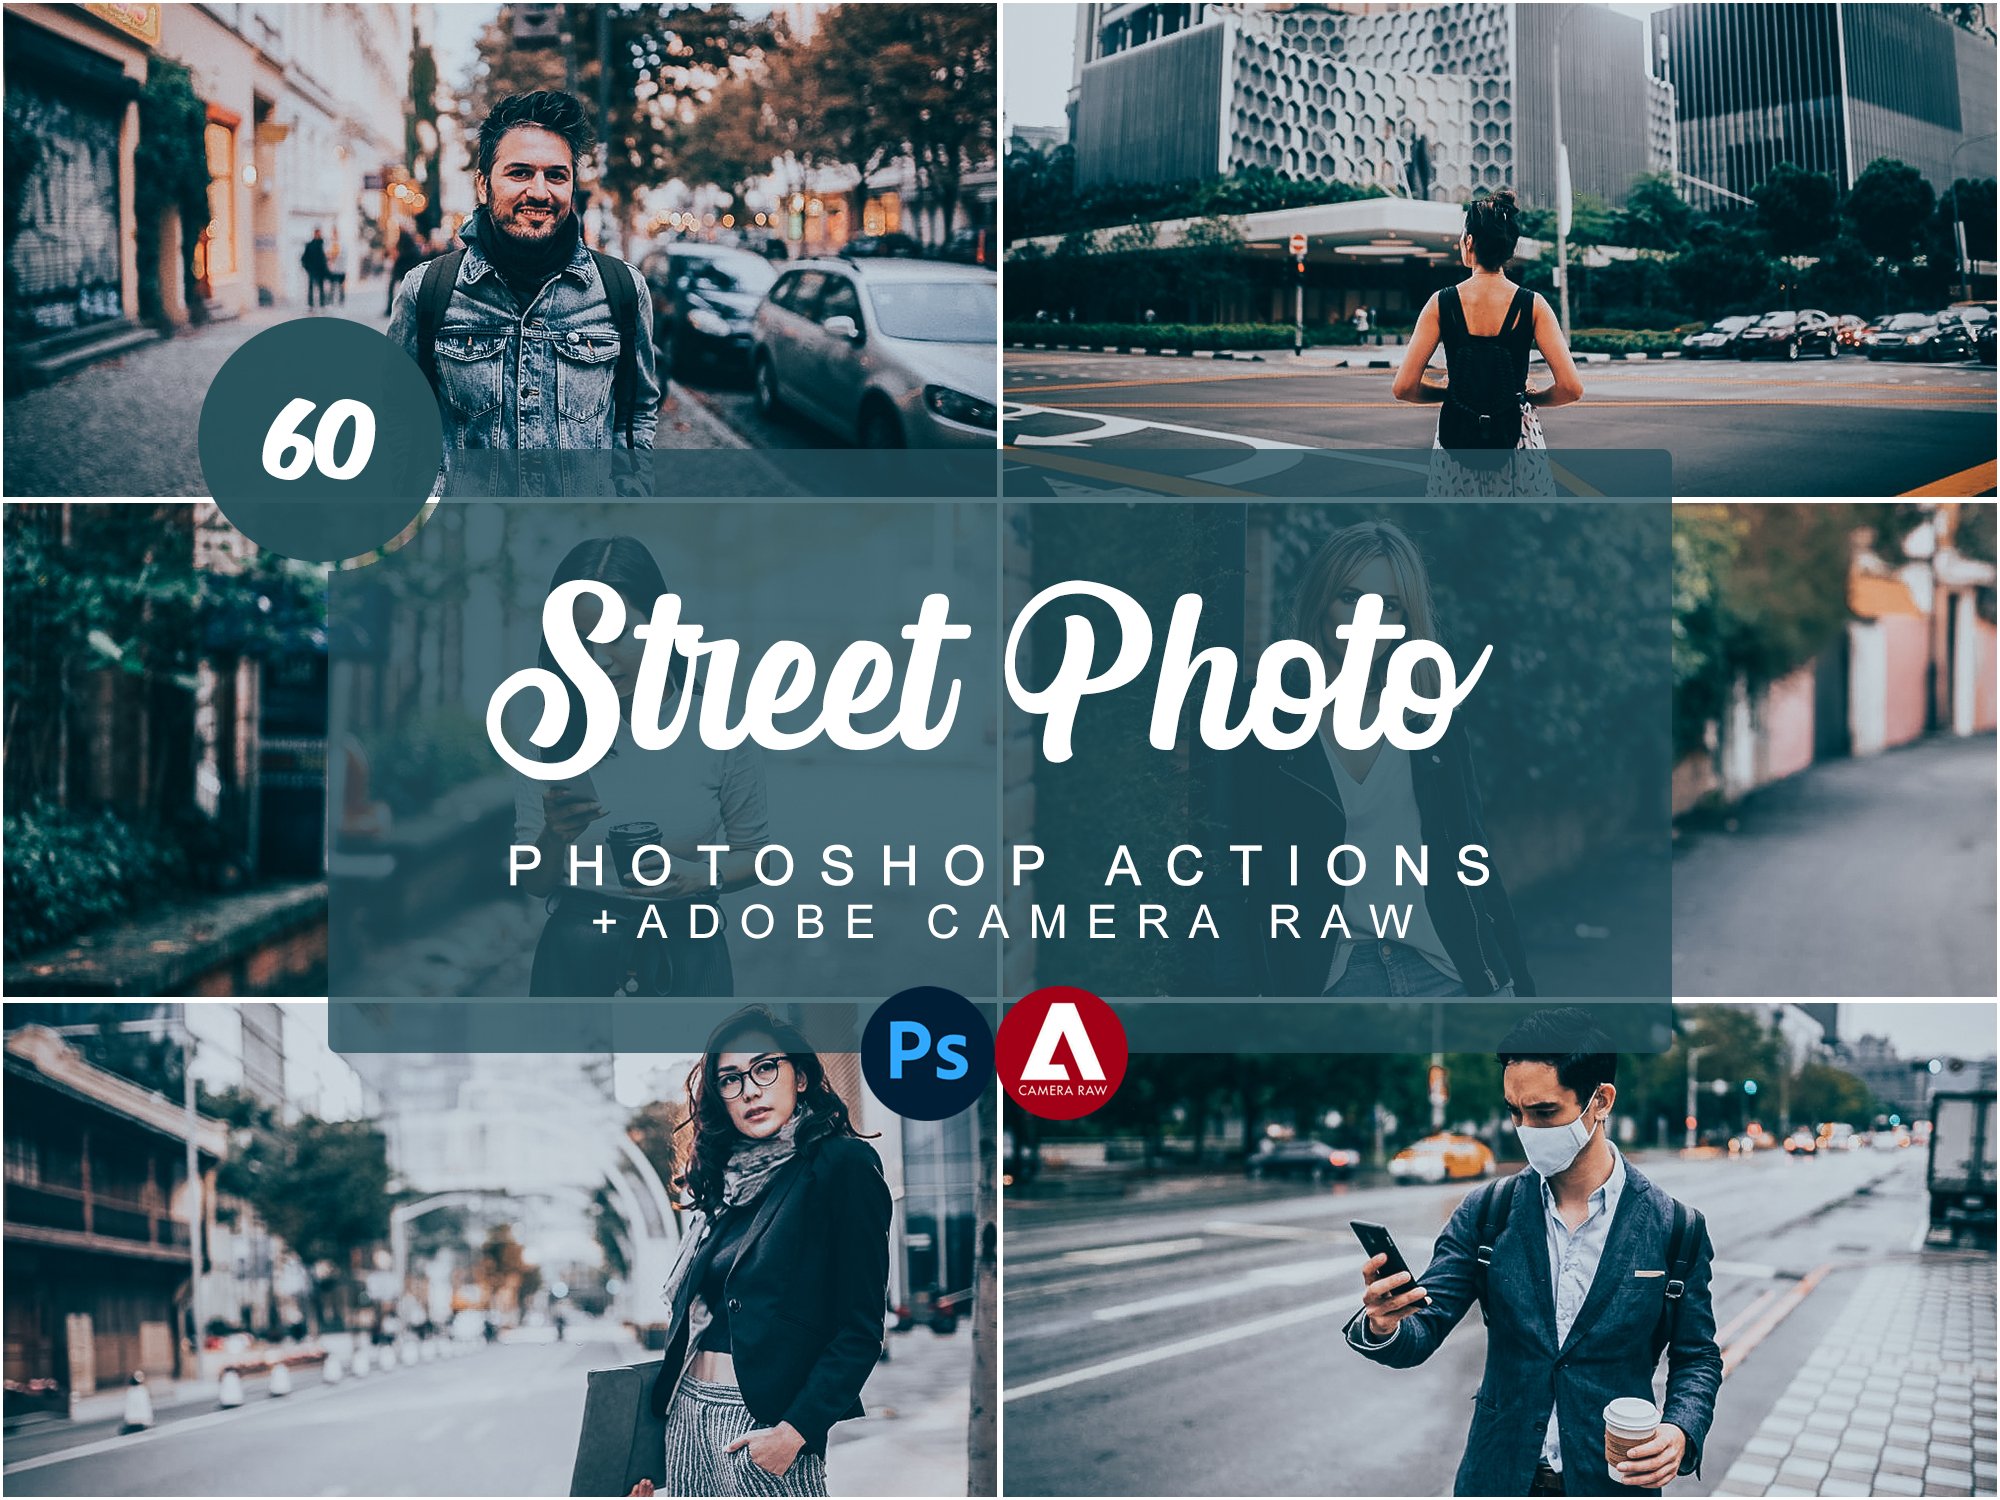 Street Photo Photoshop Actionscover image.